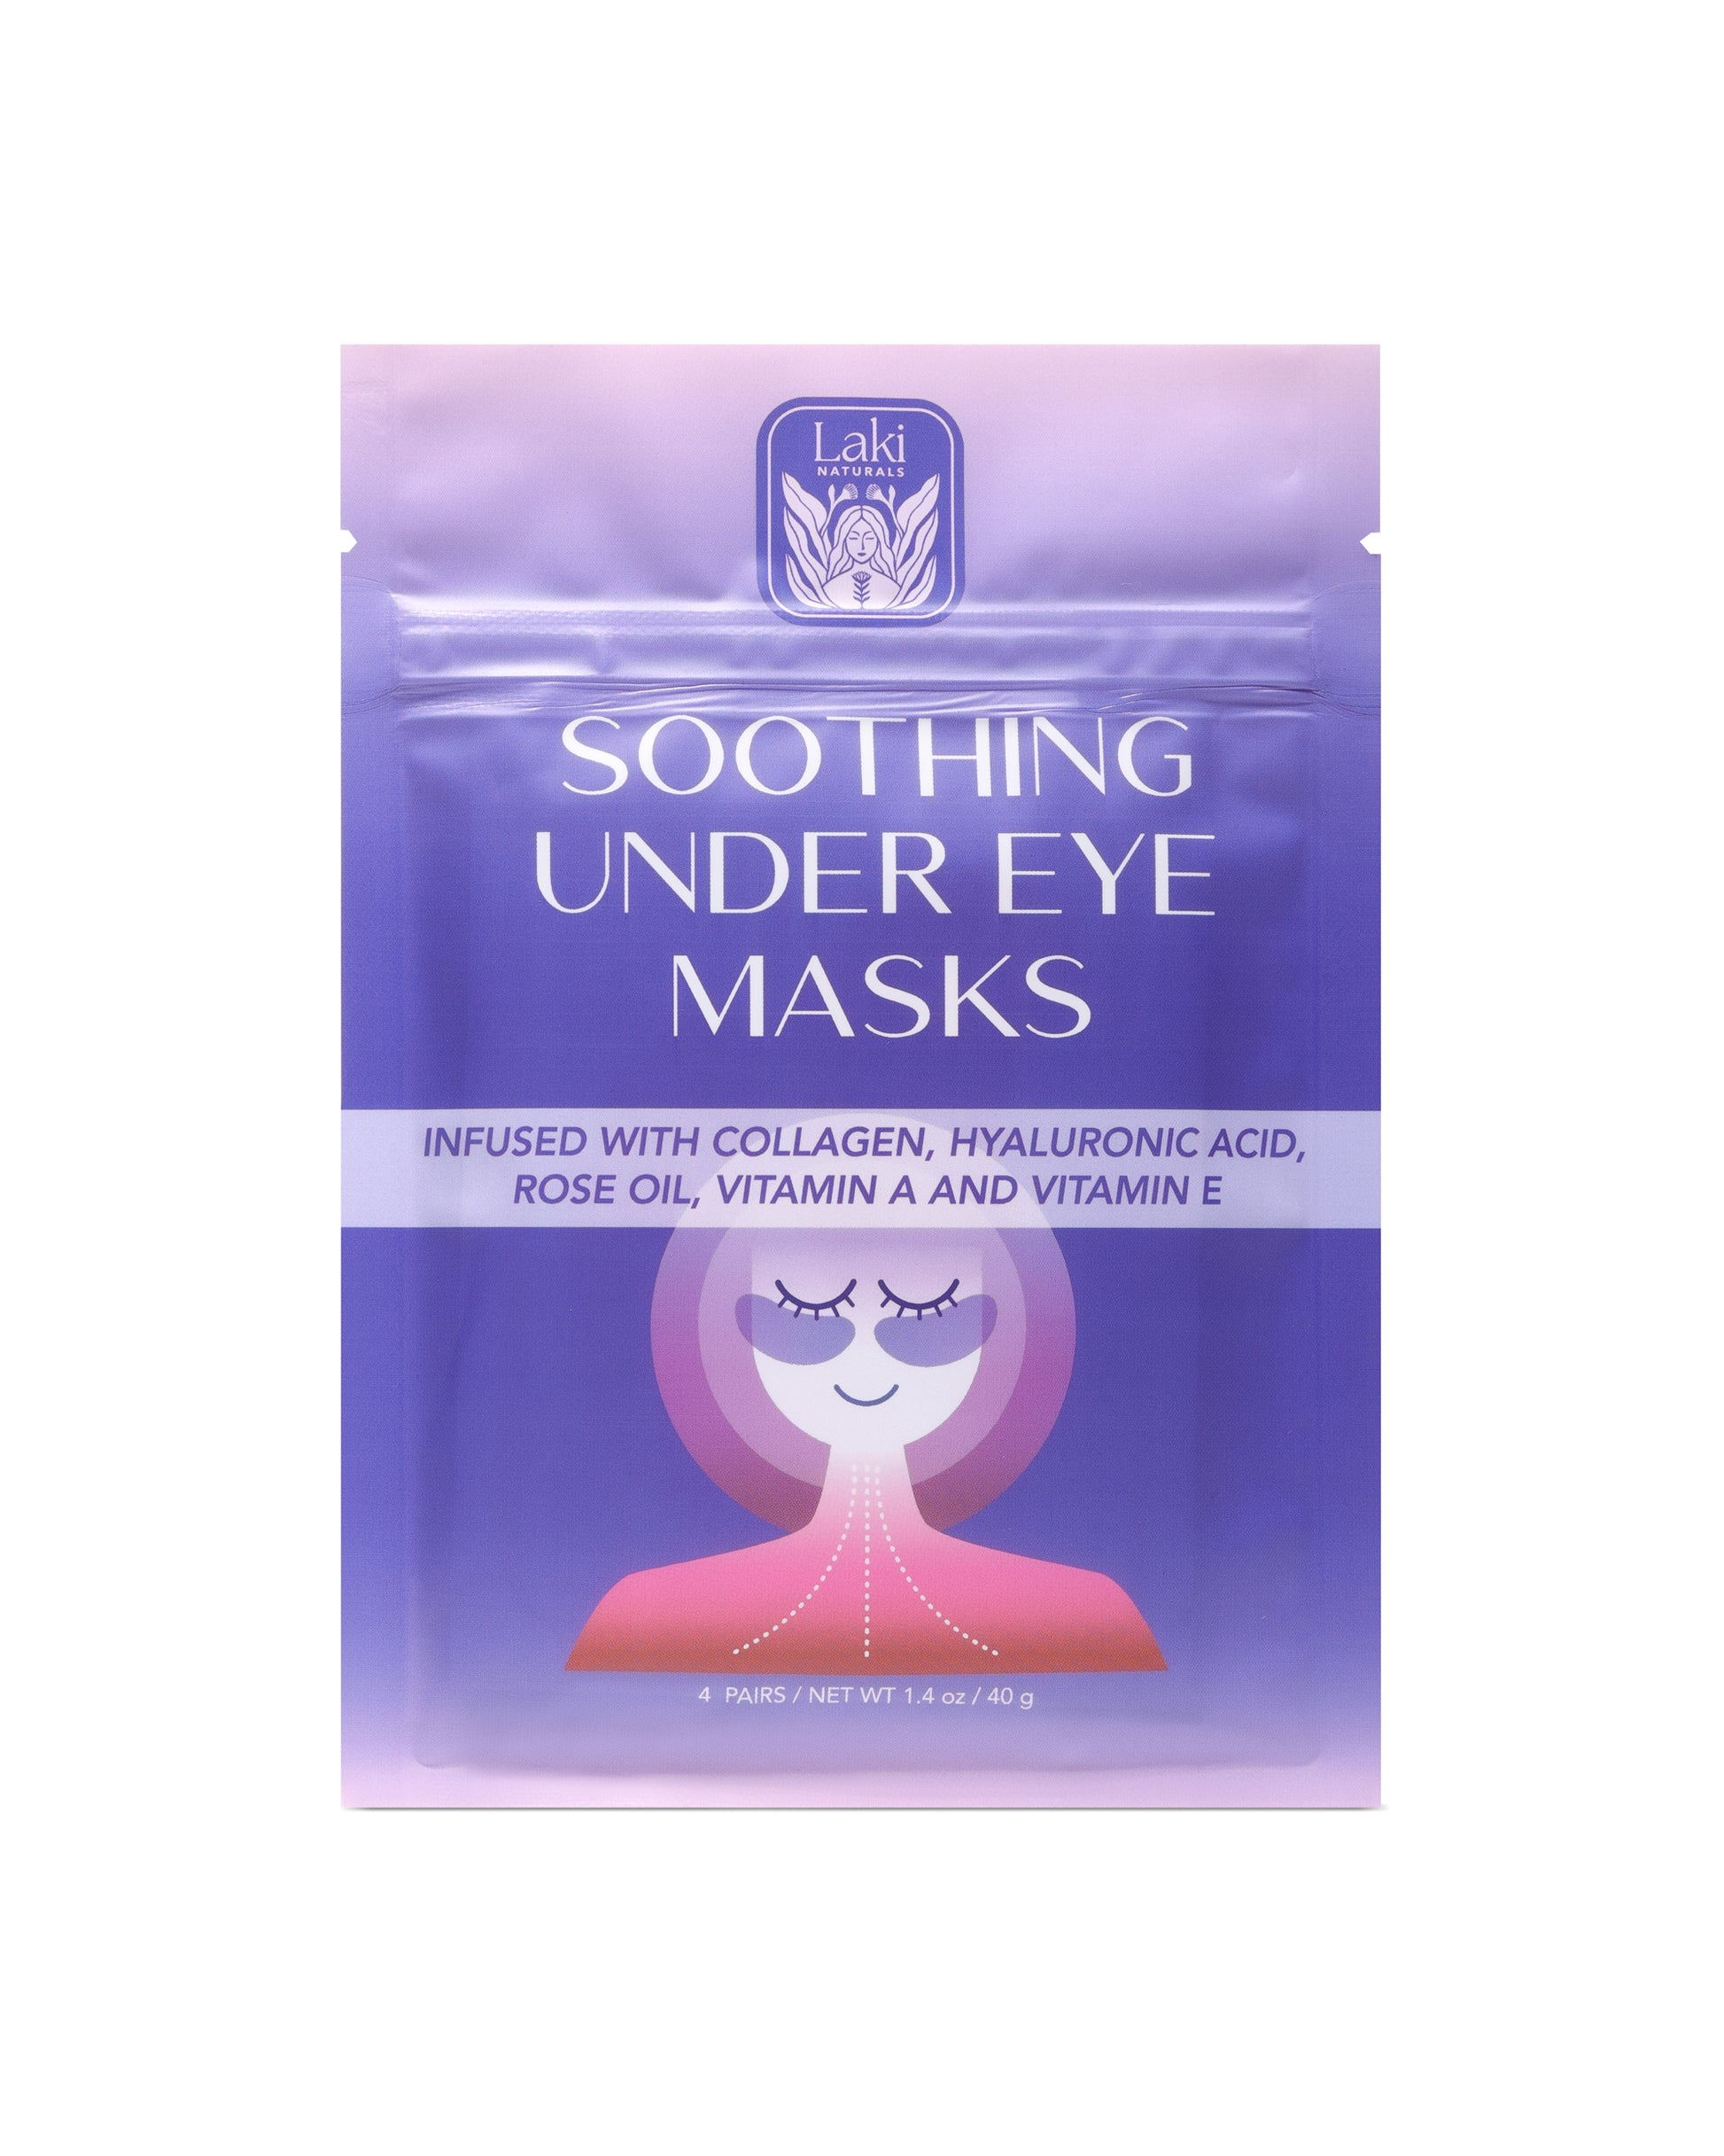 Soothing Under Eye Masks - Laki Naturals